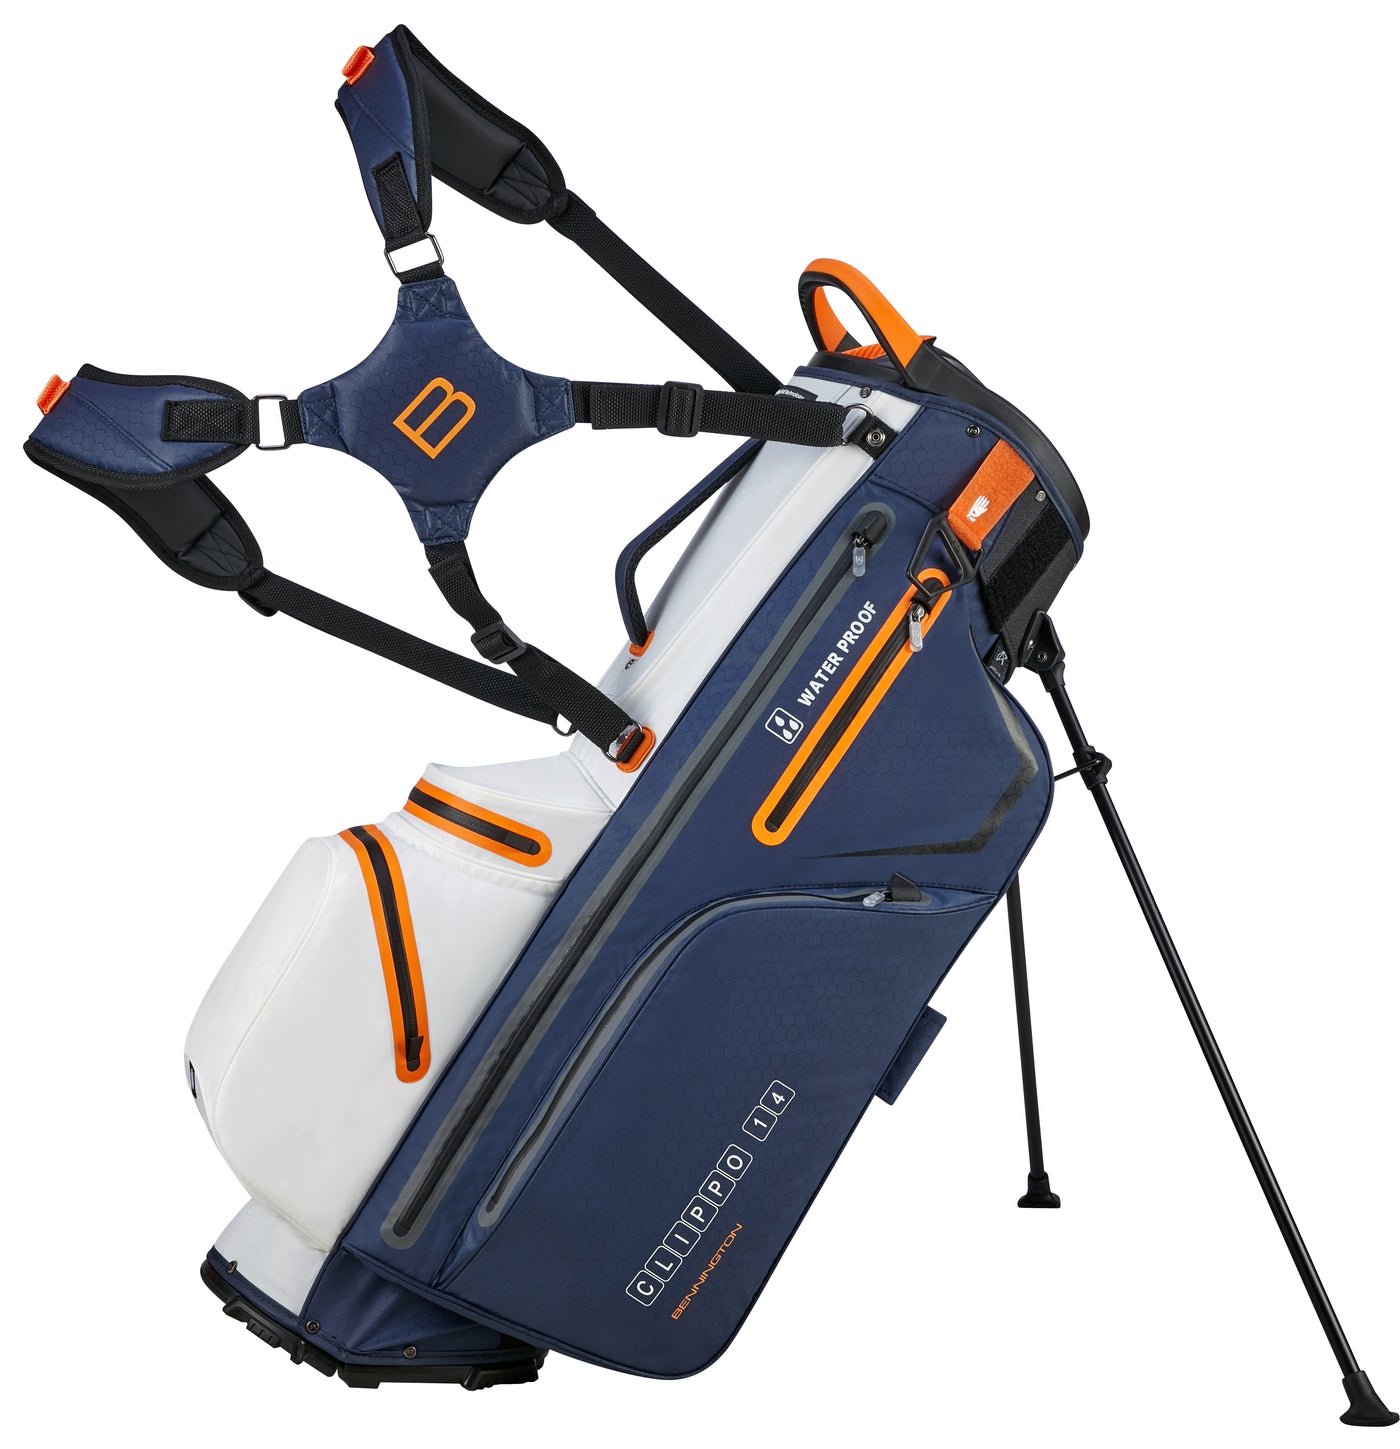 BENNINGTON CLIPPO 14 Waterproof golf bag